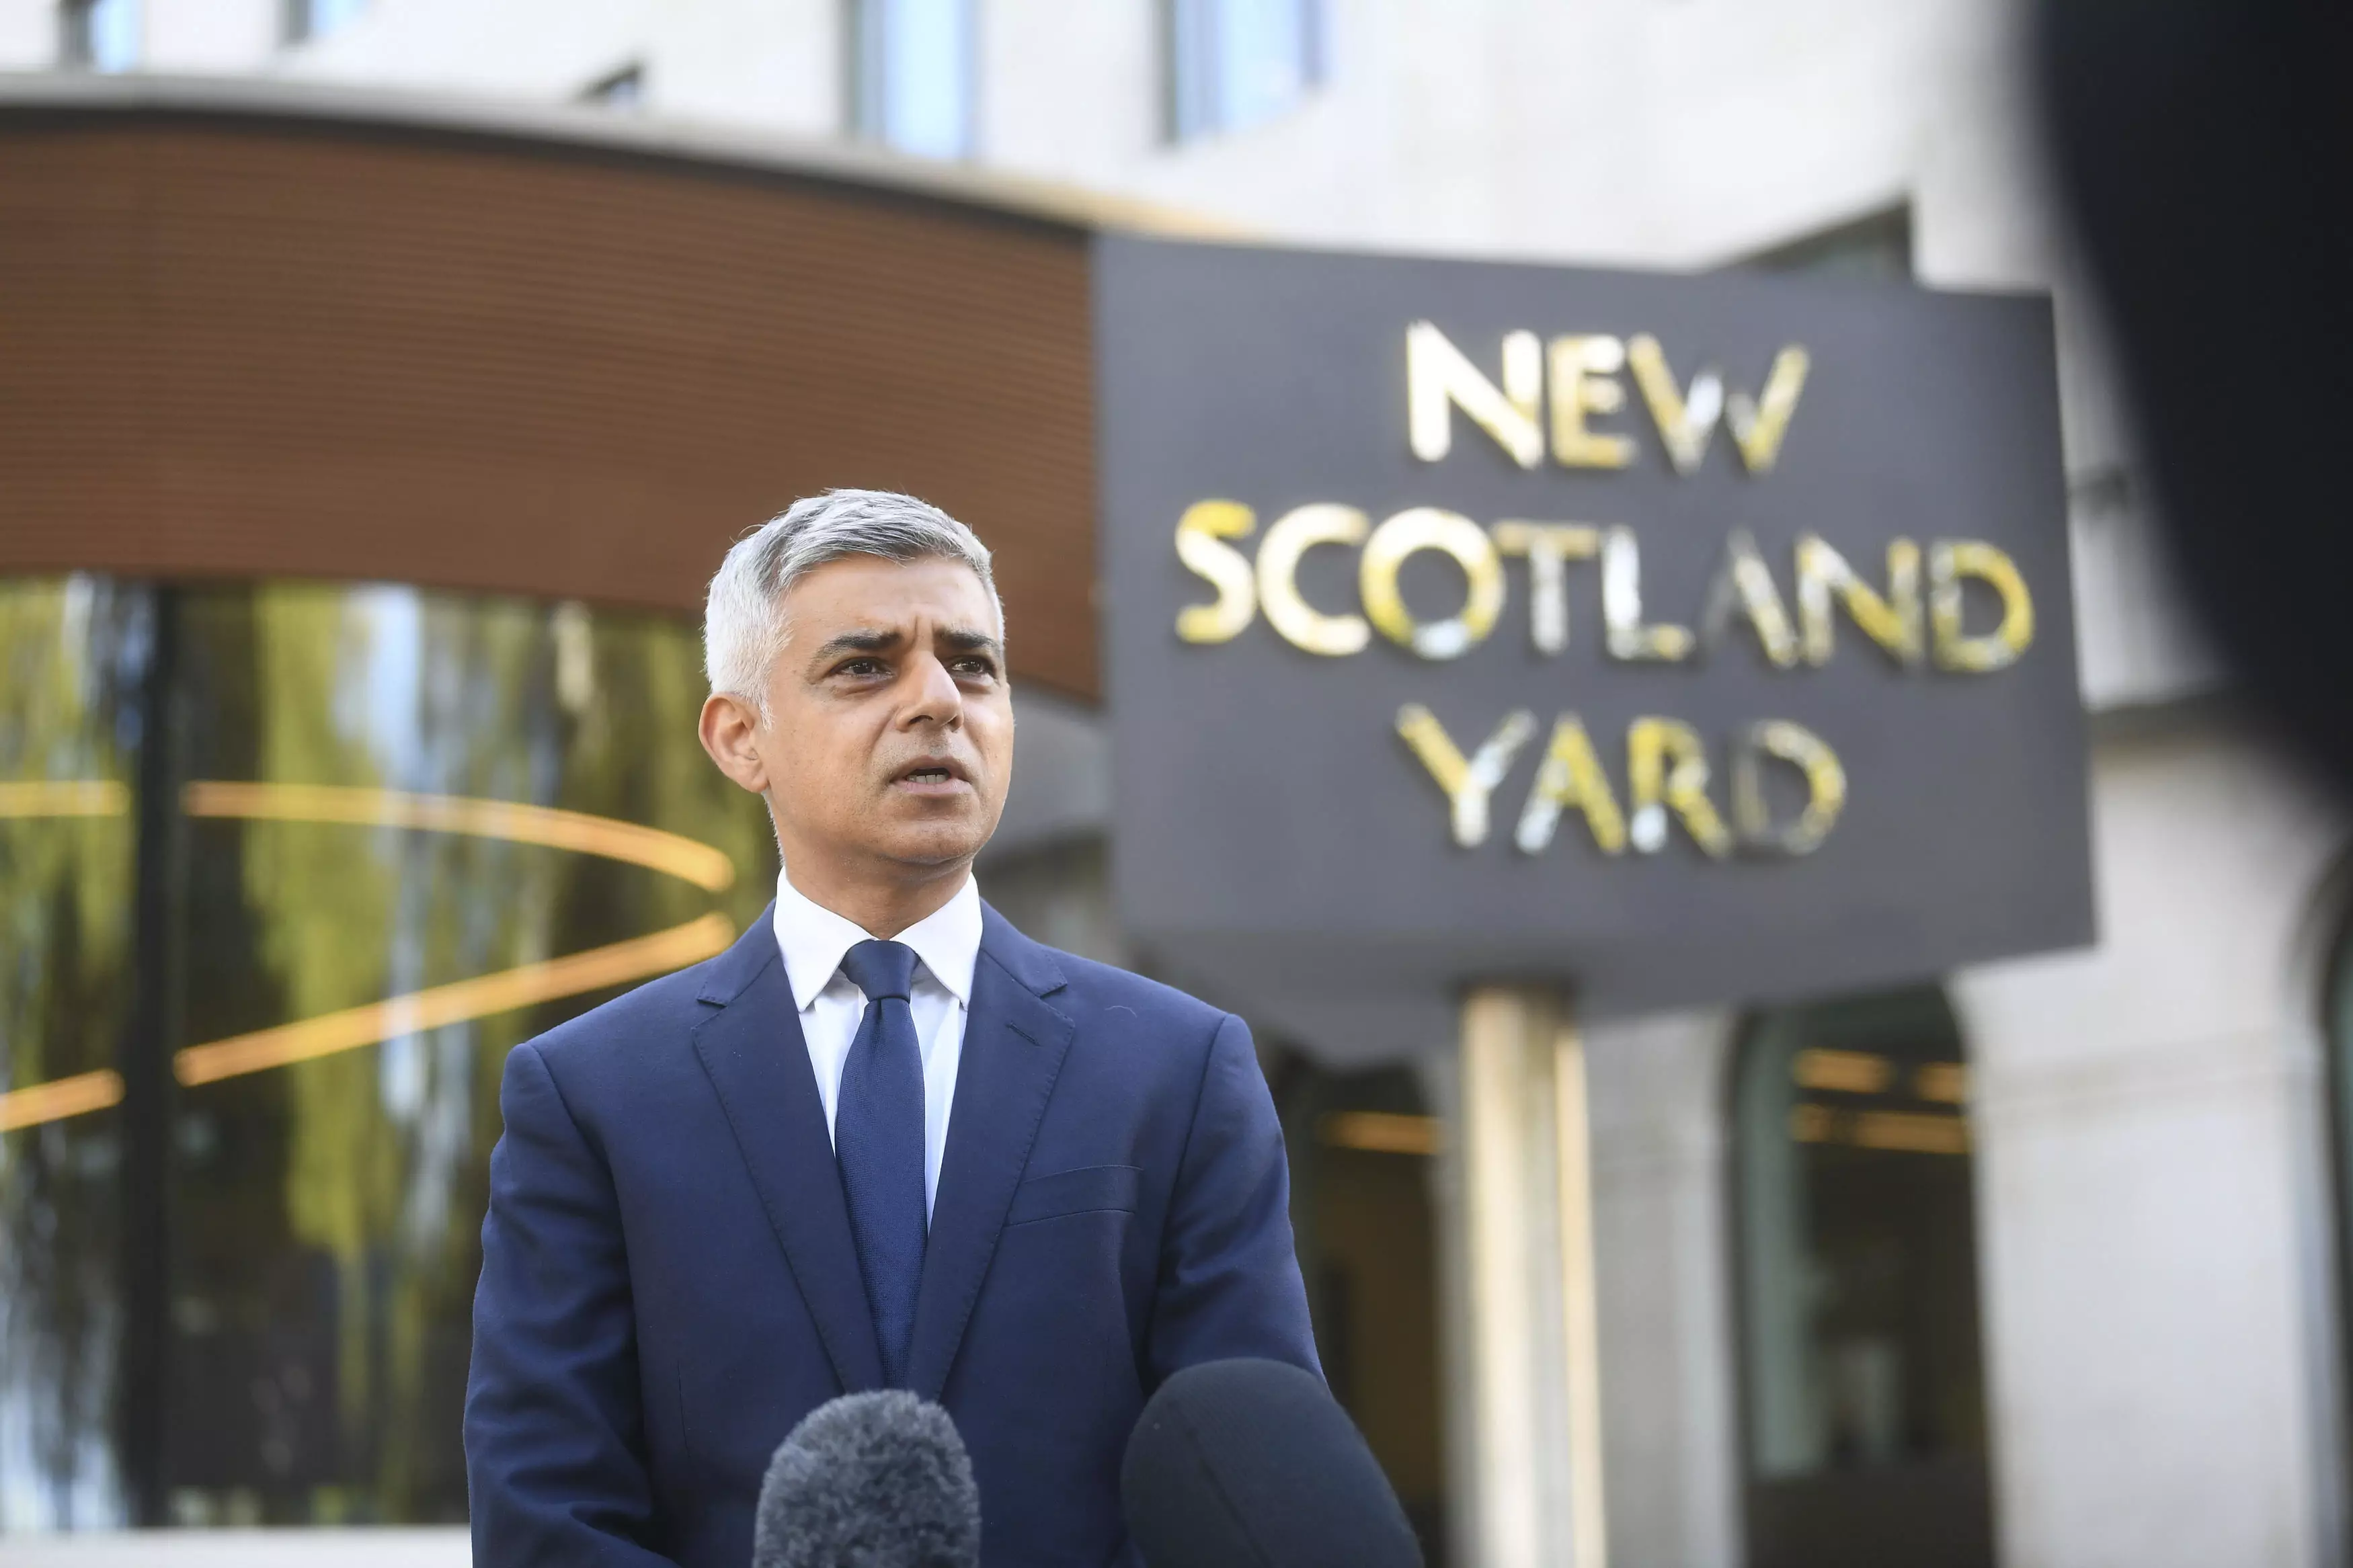 Mayor of London Sadiq Khan speaks to media at New Scotland Yard today.